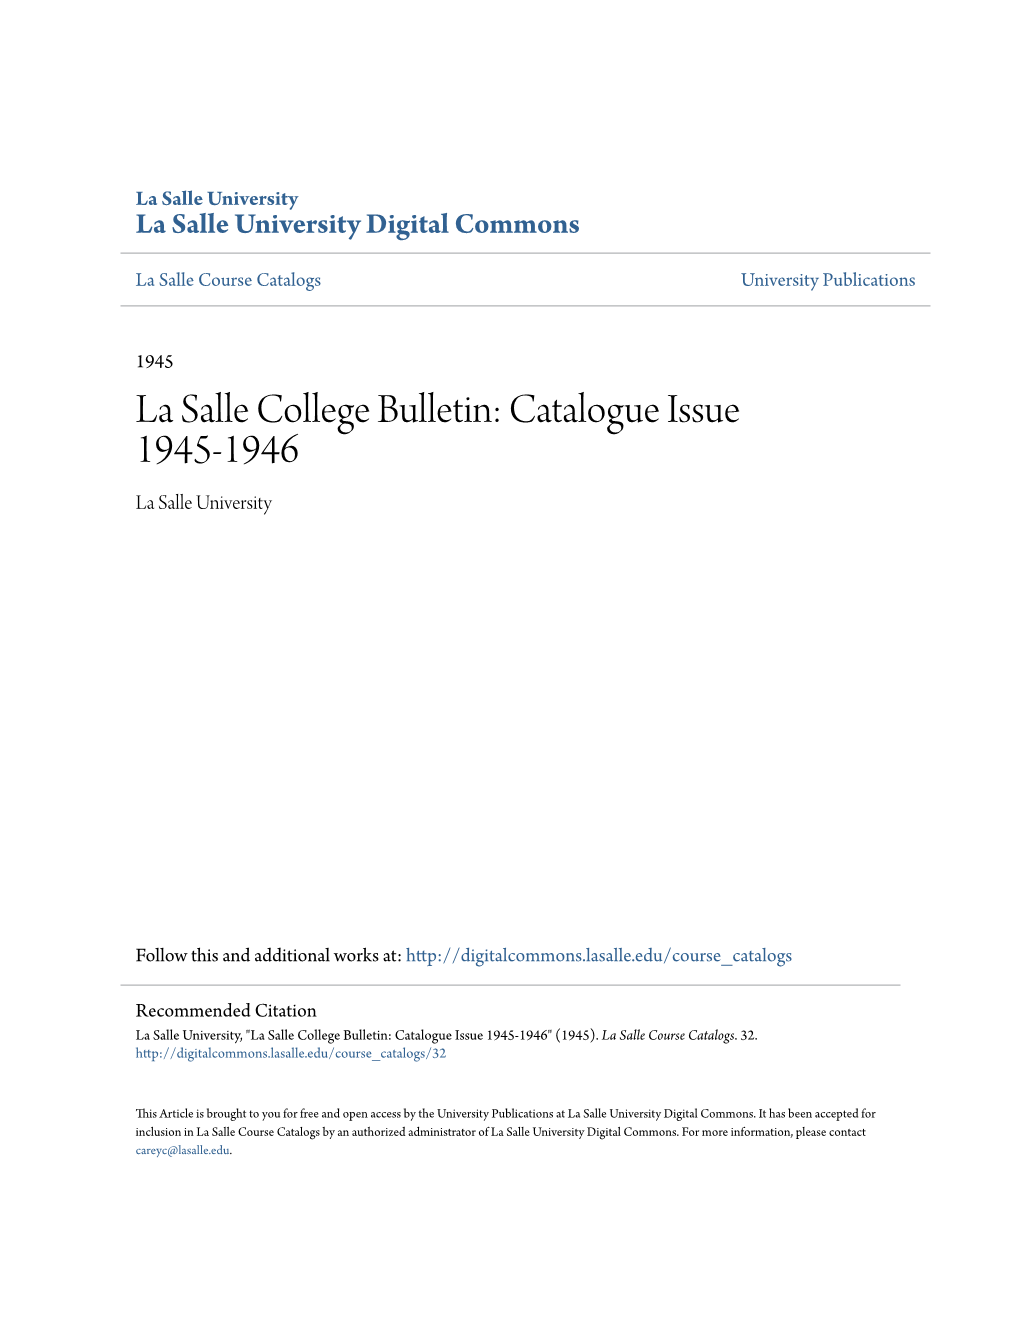 La Salle College Bulletin: Catalogue Issue 1945-1946 La Salle University